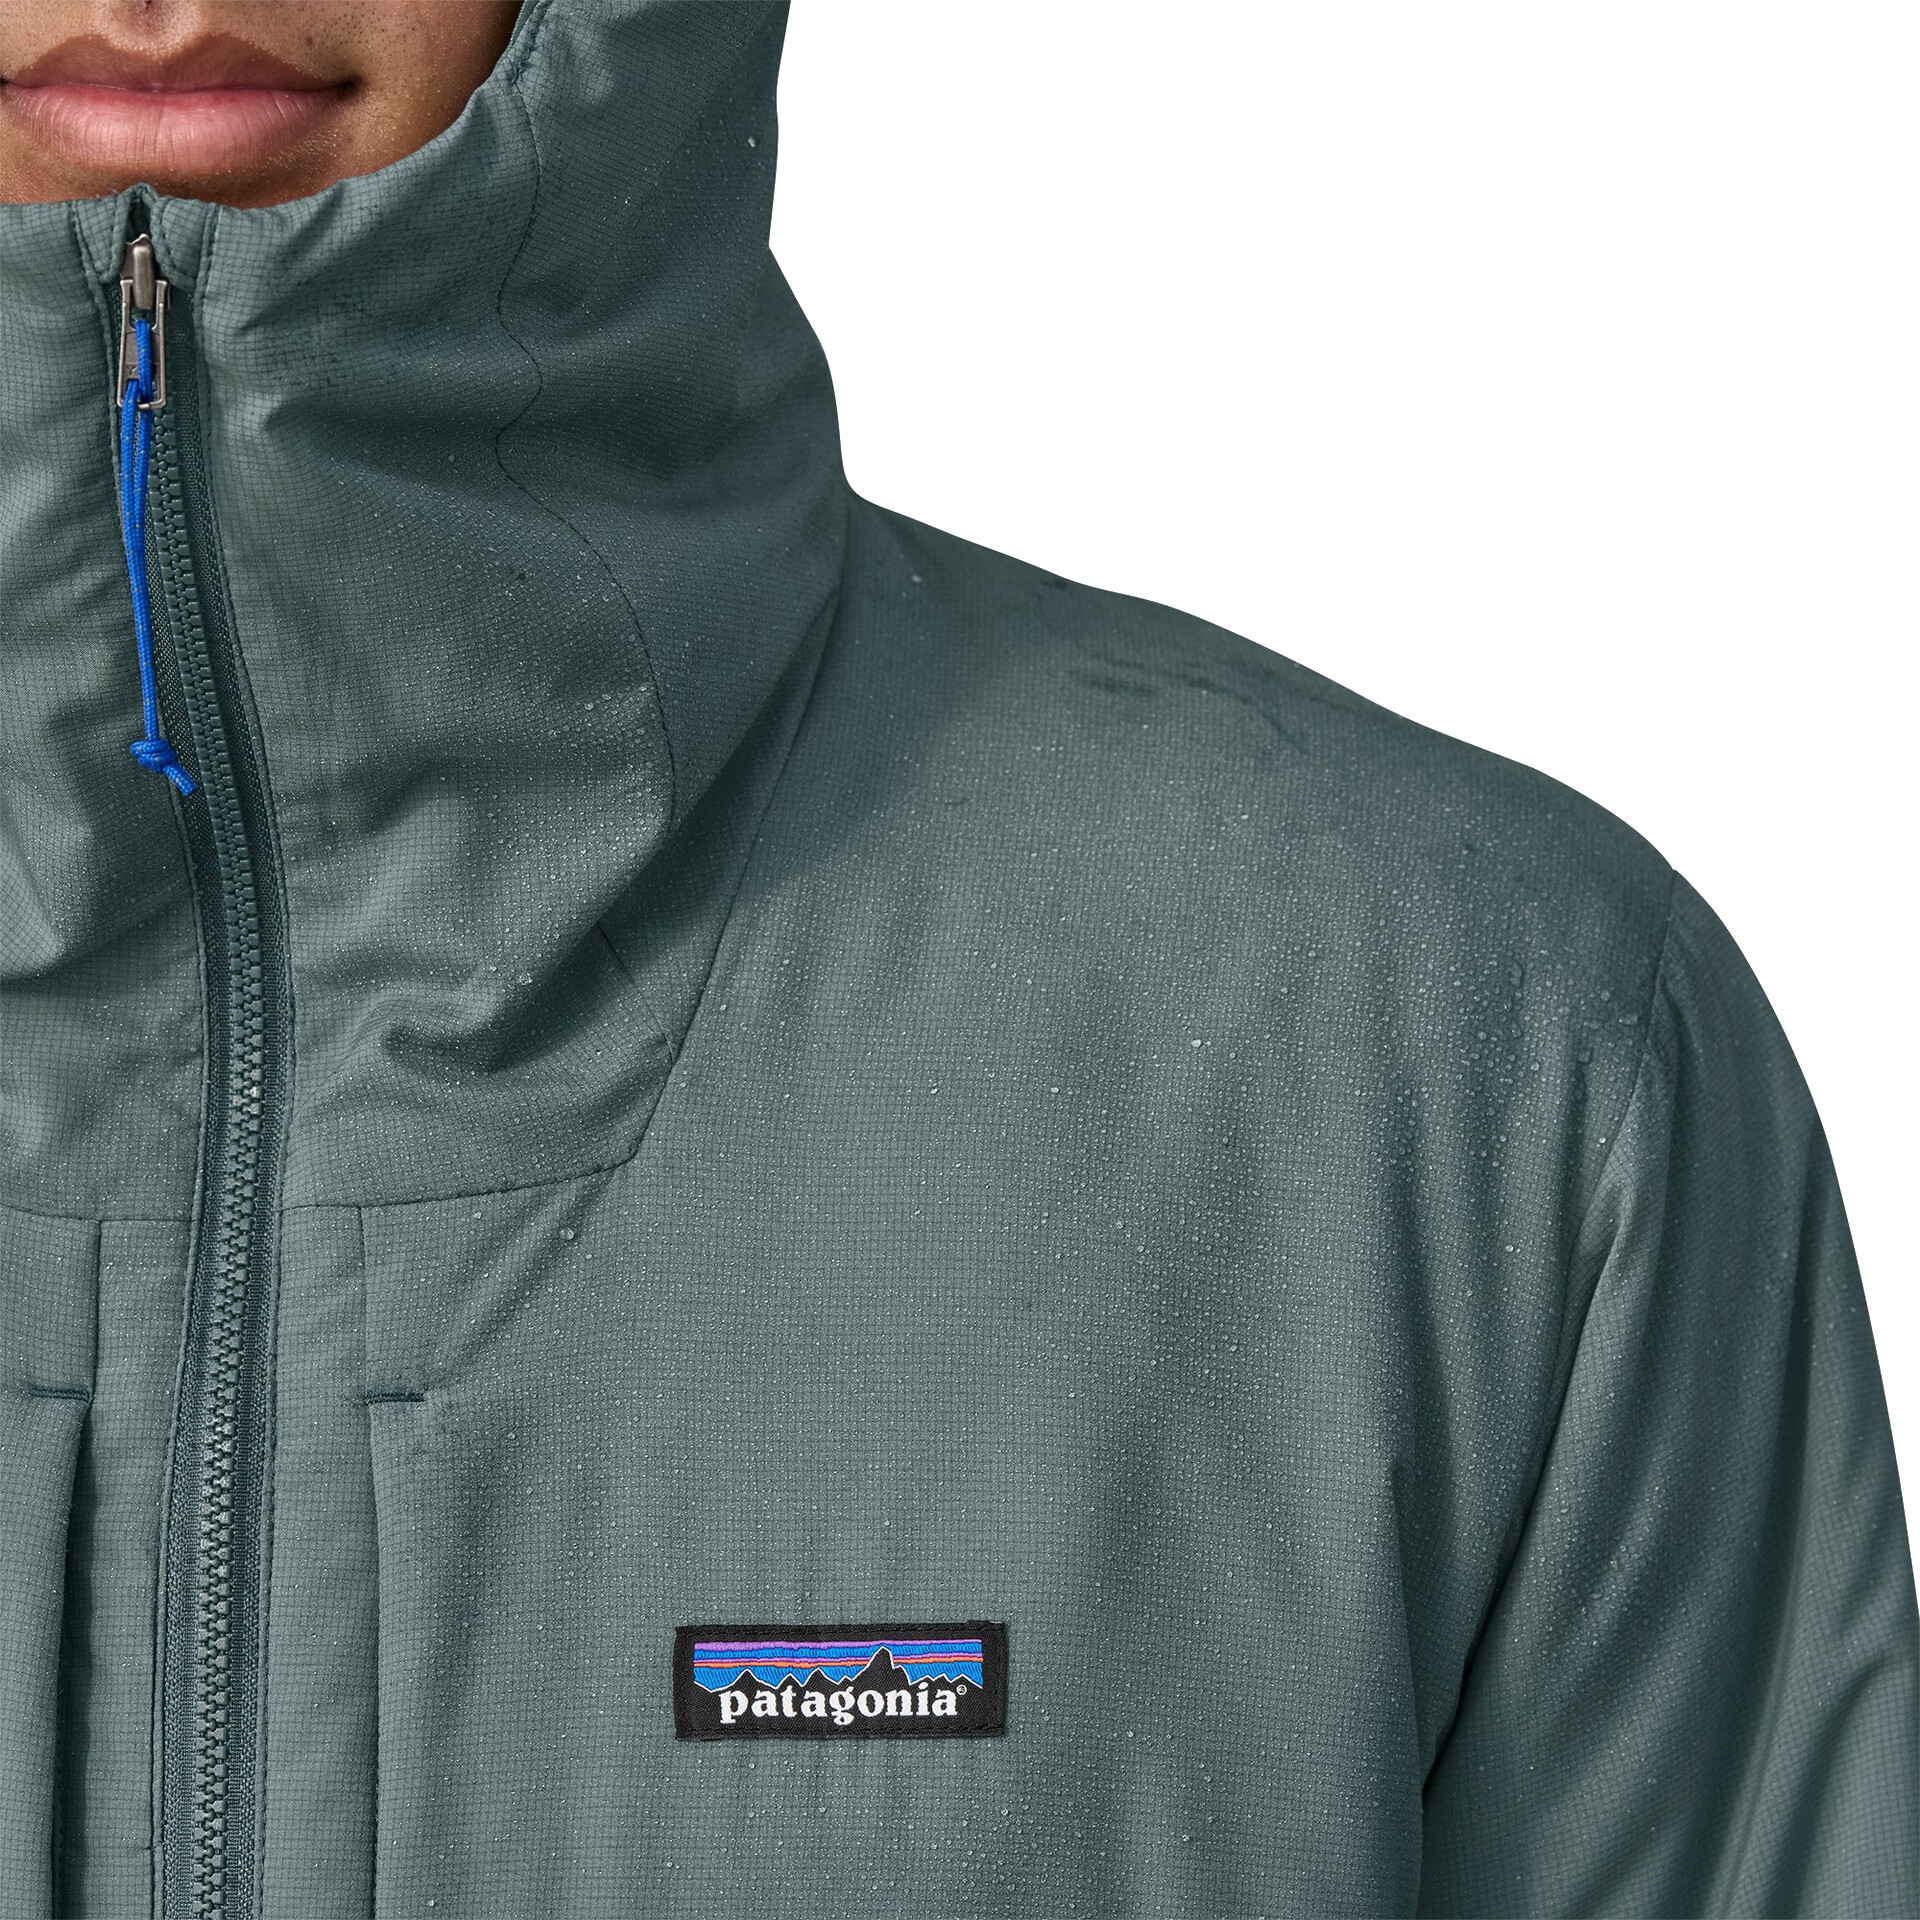 Patagonia Nano-Air Hoody Men's Insulated Jacket